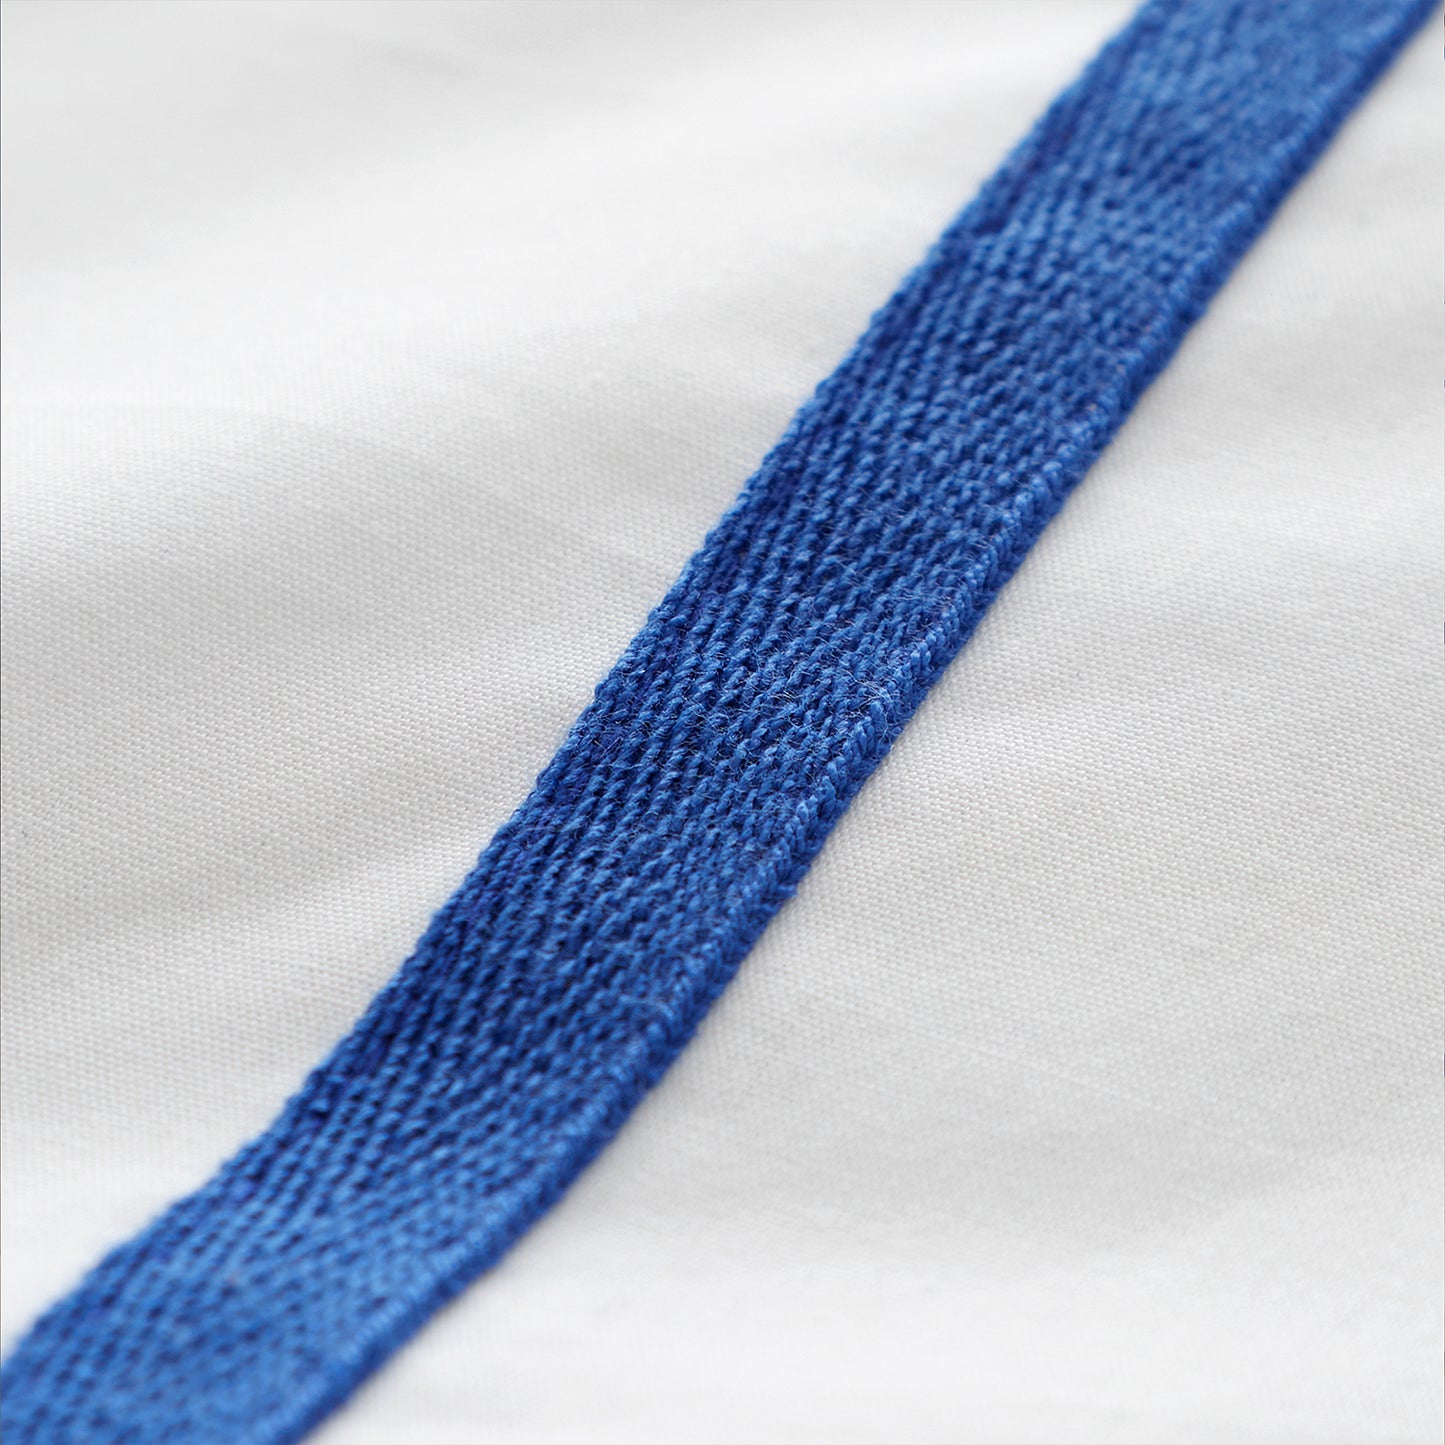 Content By Terence Conran Herringbone Blue Stripe Cotton Duvet Set